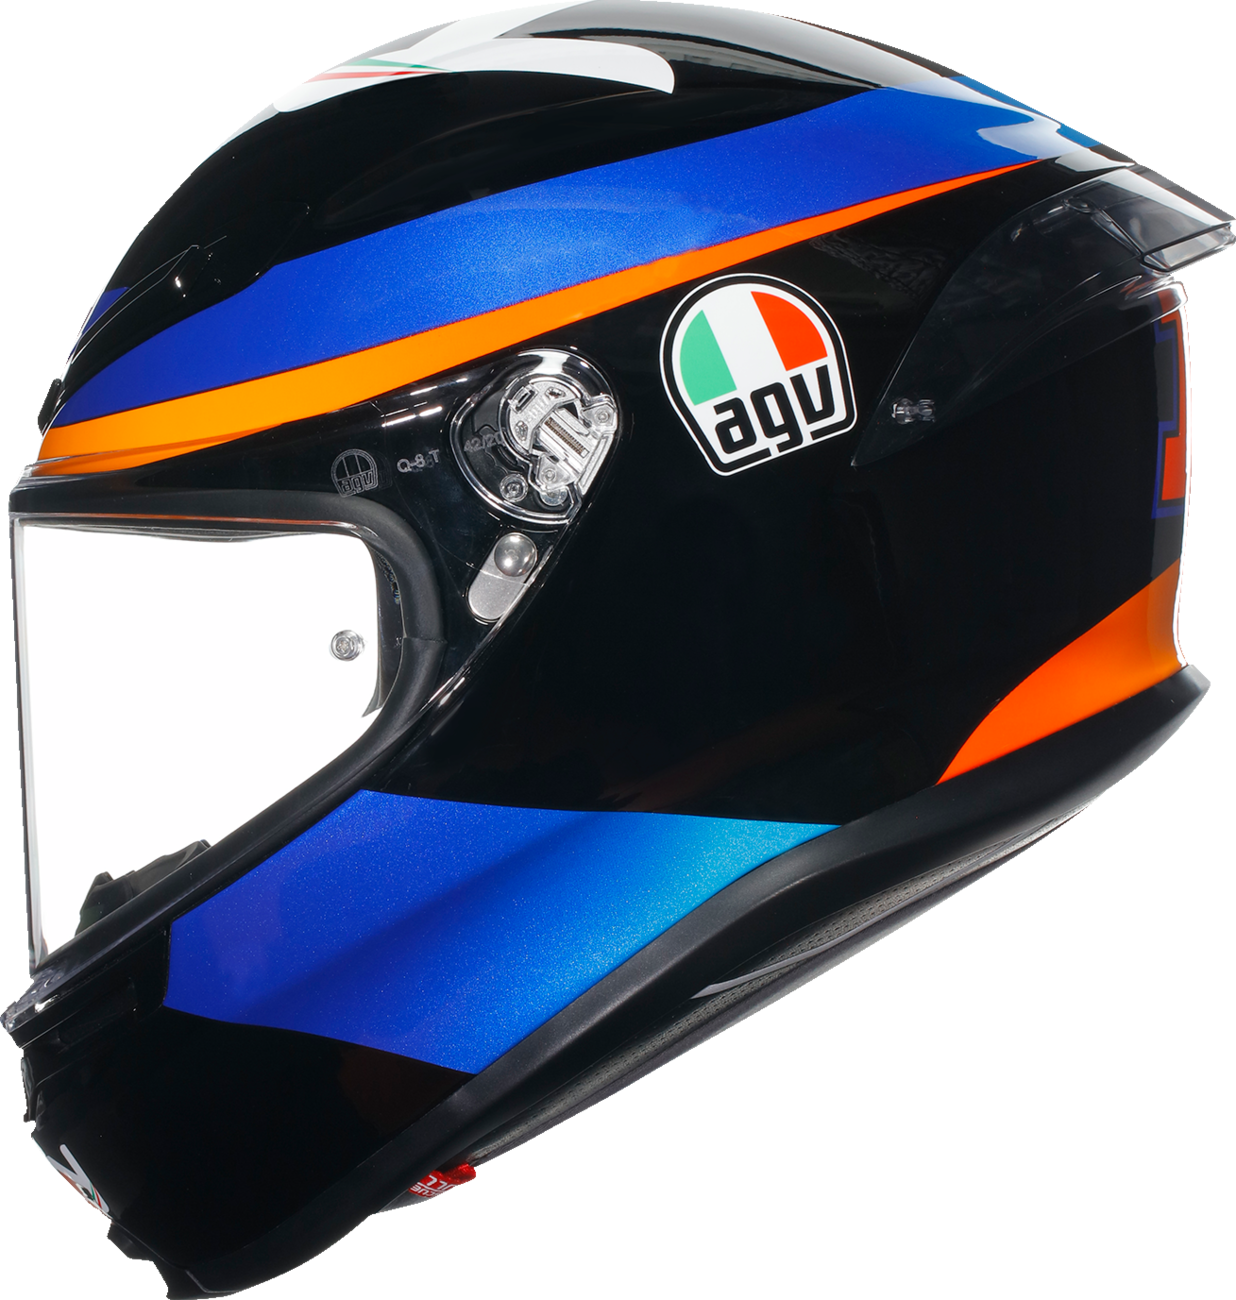 Casco AGV K6 S - Marini Sky Racing Team 2021 - Pequeño 2118395002002S 